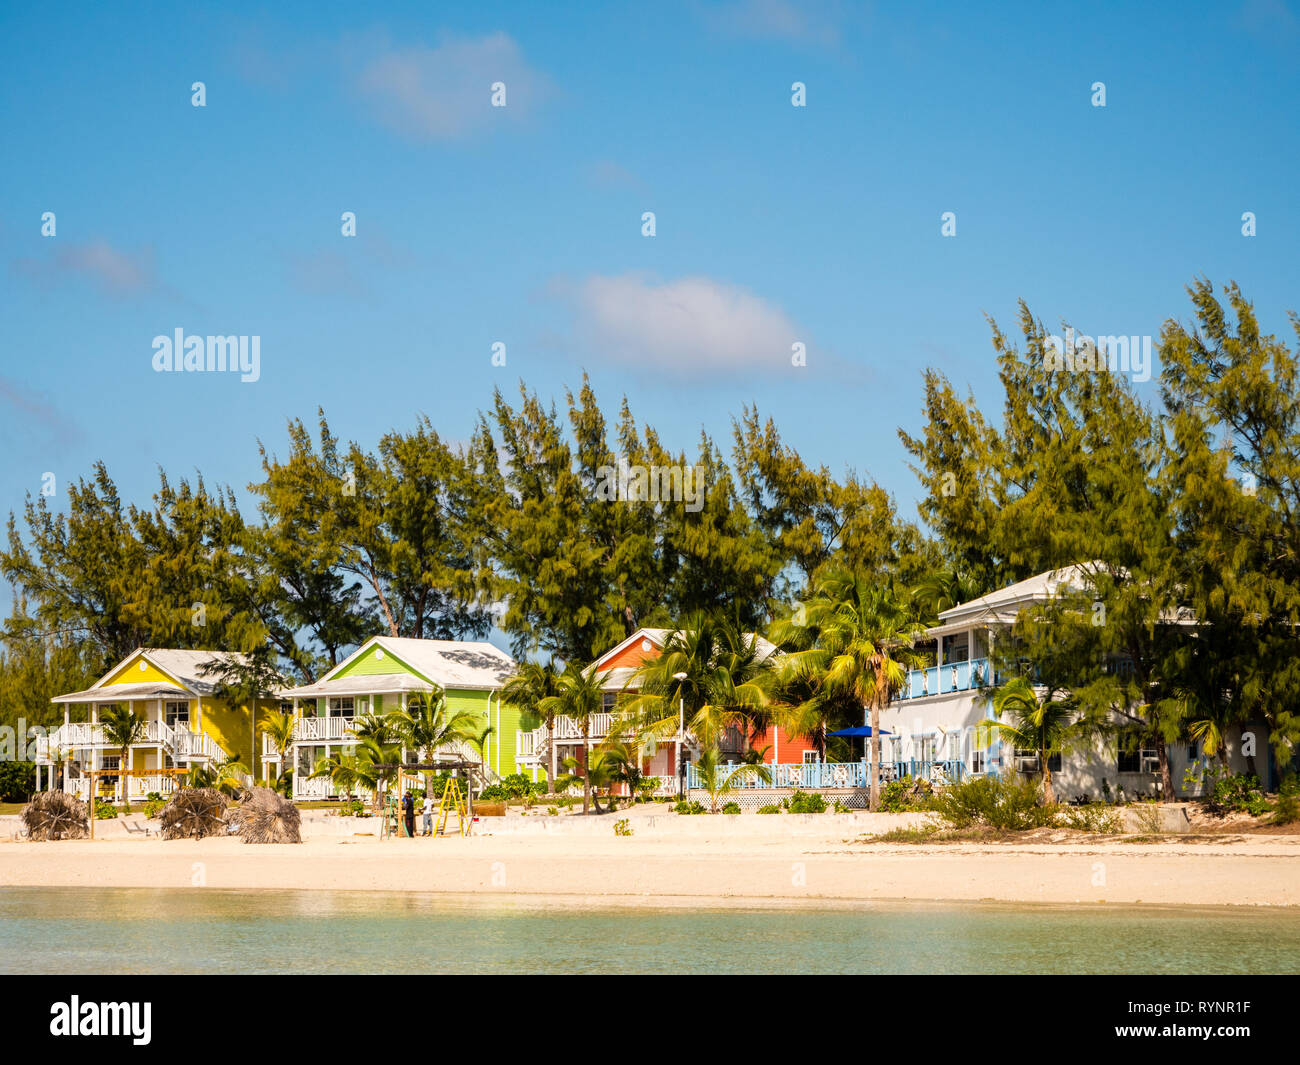 Cocodimama Charming Resort, Governors Harbour, Eleuthera Island, The Bahamas, The Caribbean. Stock Photo